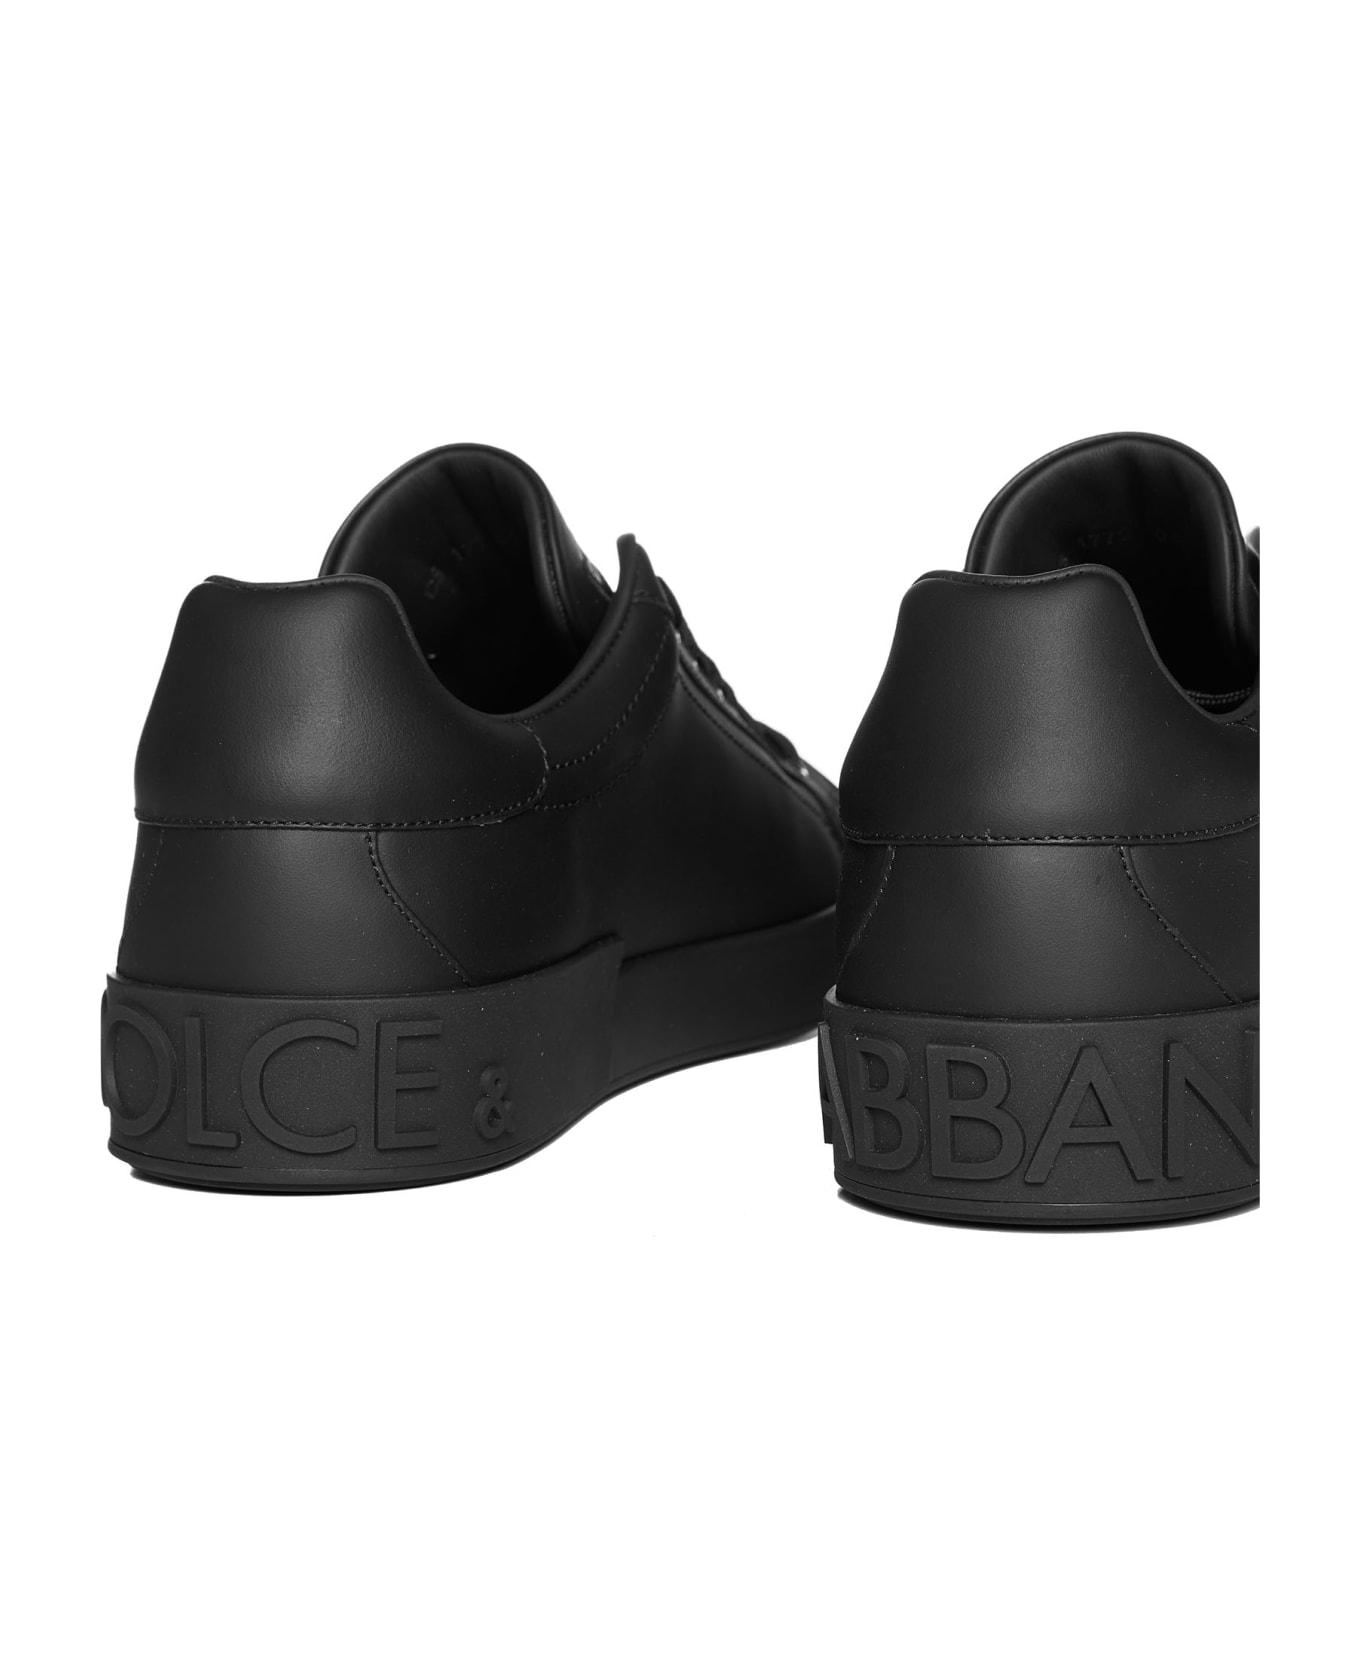 Dolce & Gabbana Portofino Sneakers - Black スニーカー